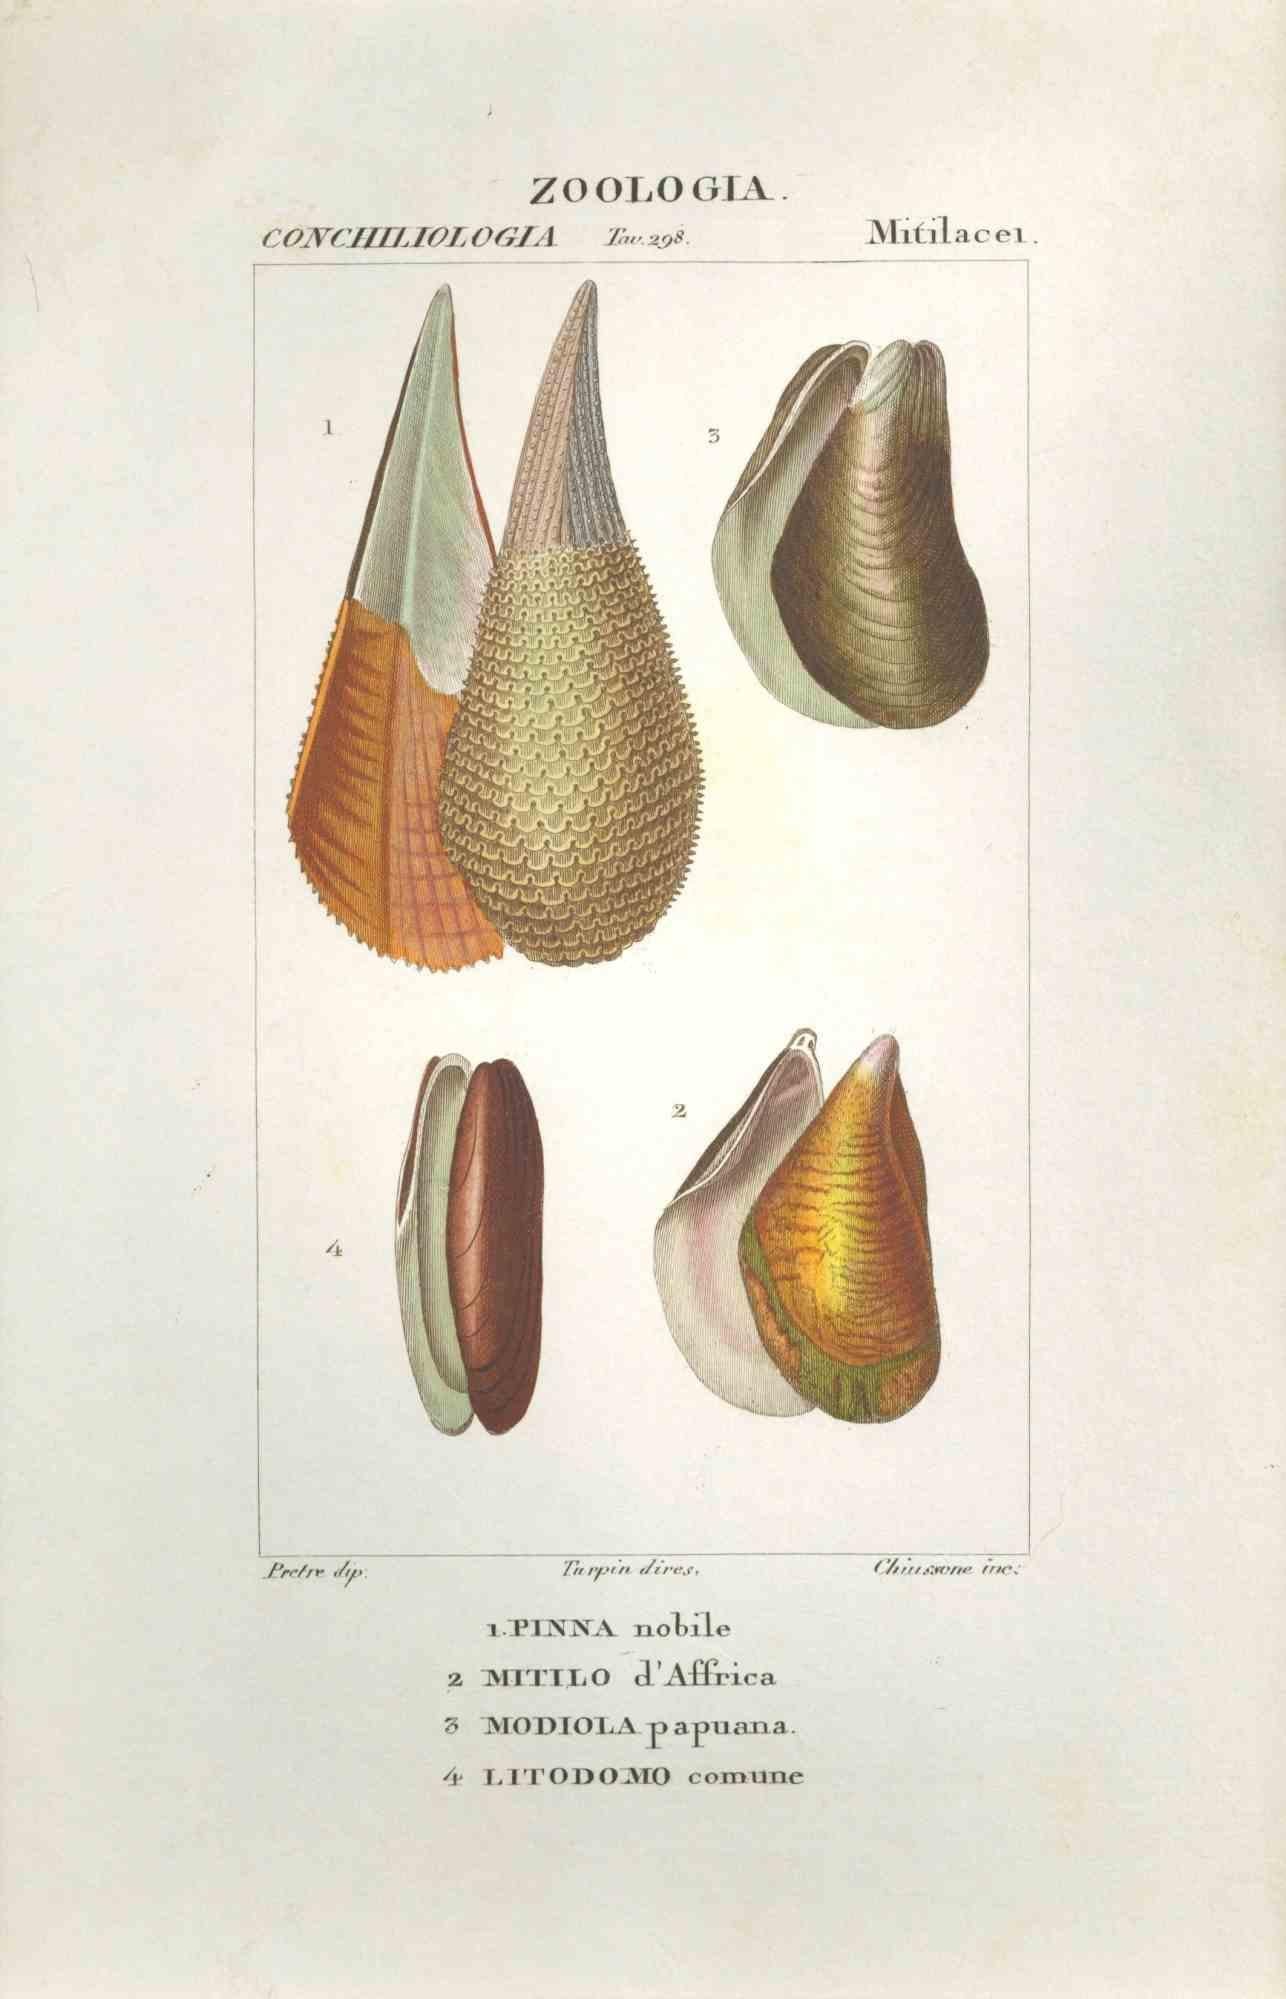 Animal Print TURPIN, P[ierre Jean Francois] - Mitilacei-Mytila-Zoology-Plate 298- gravure de Jean Francois Turpin-1831